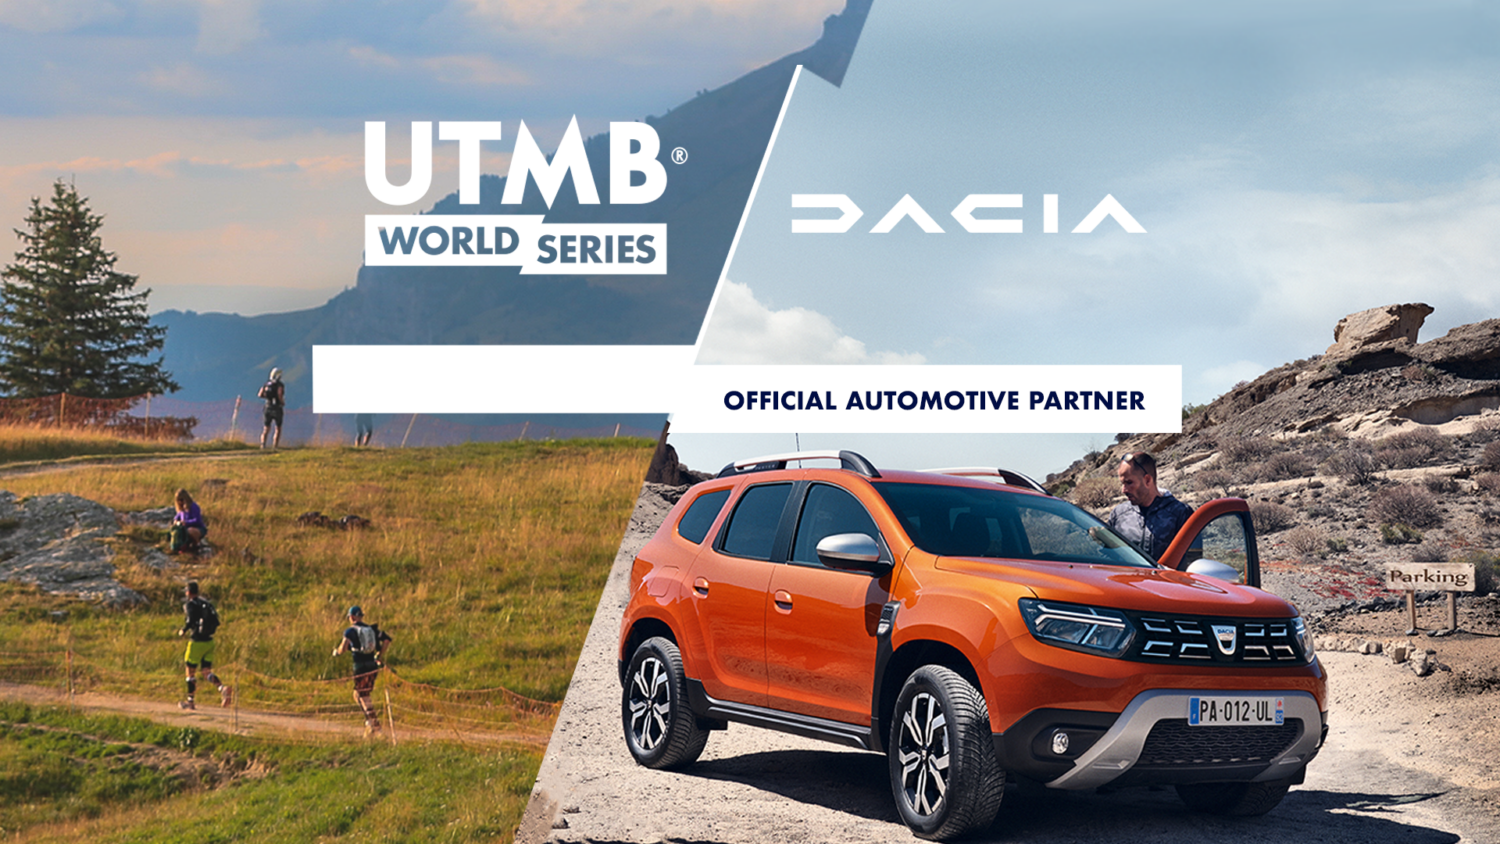 2022 - Dacia and UTMB® World Series announce a multi-year partnership